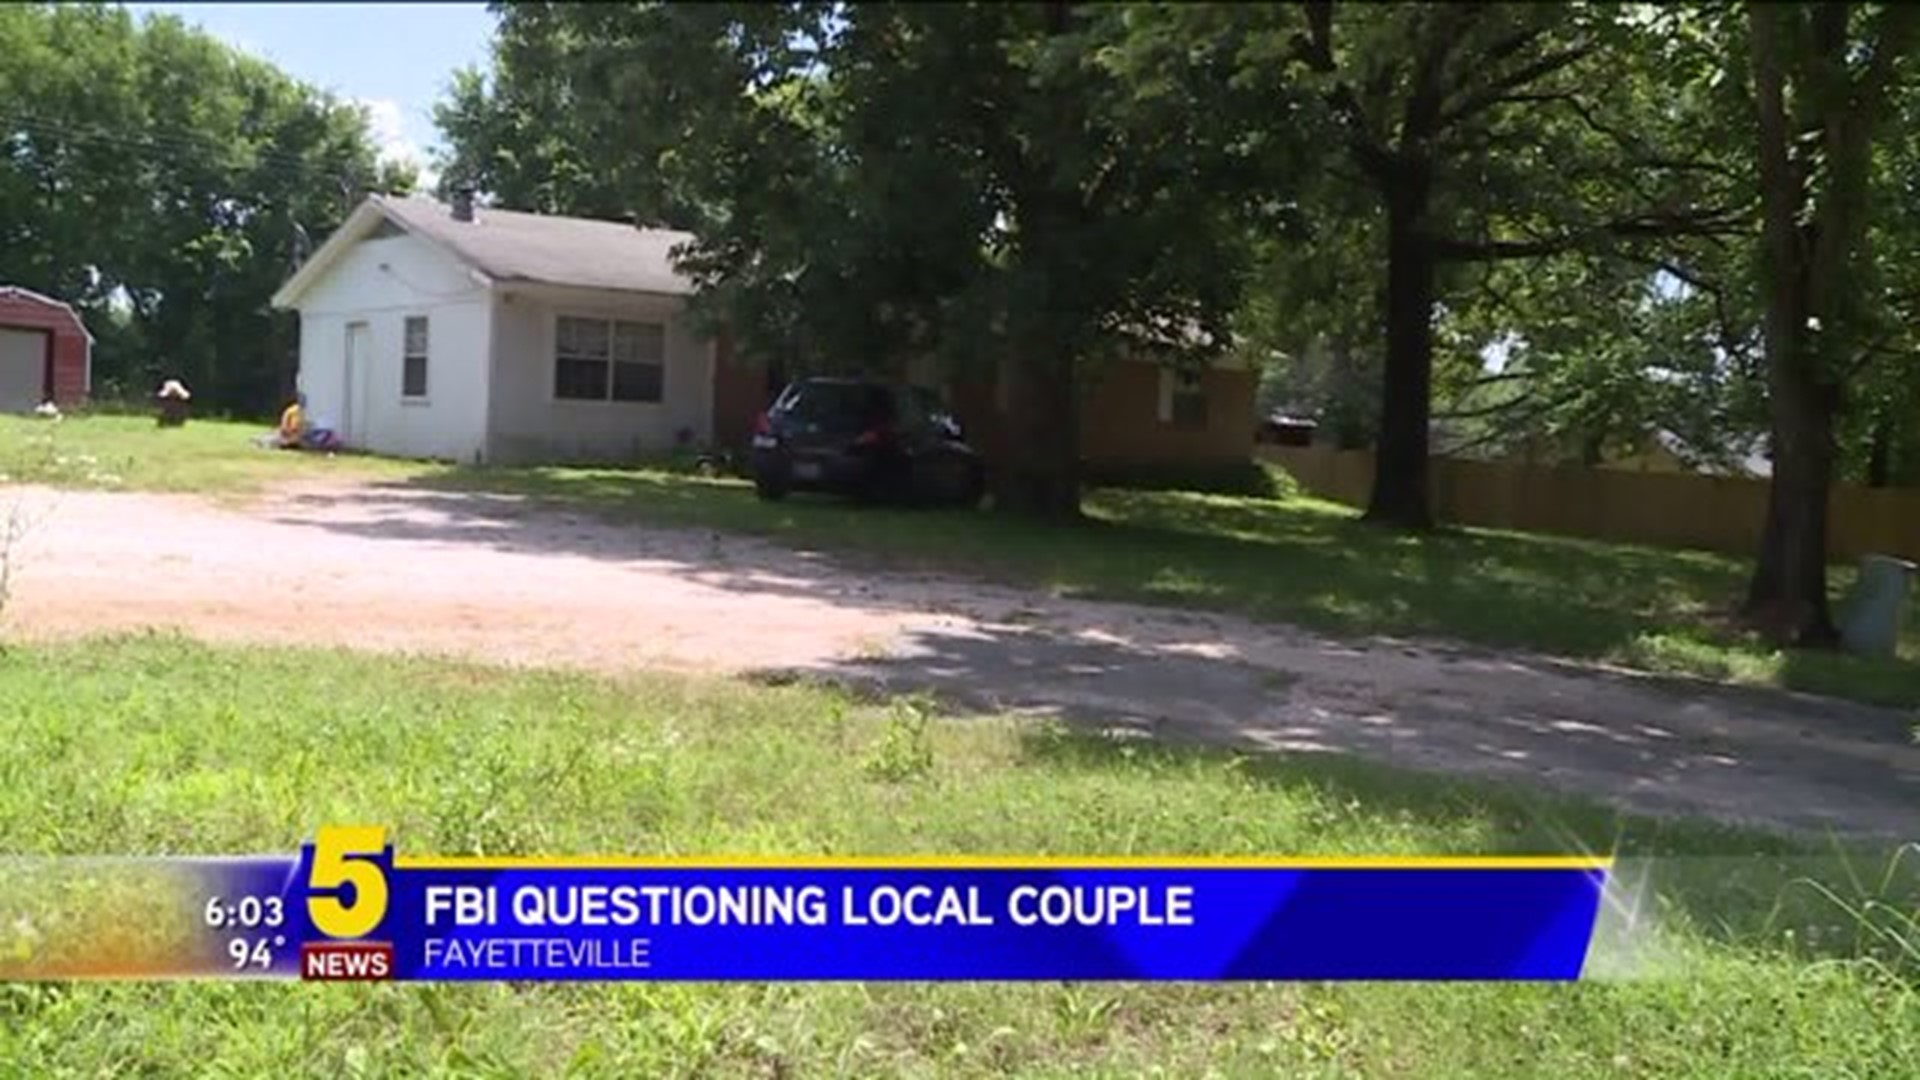 FBI Questioning Local Couple